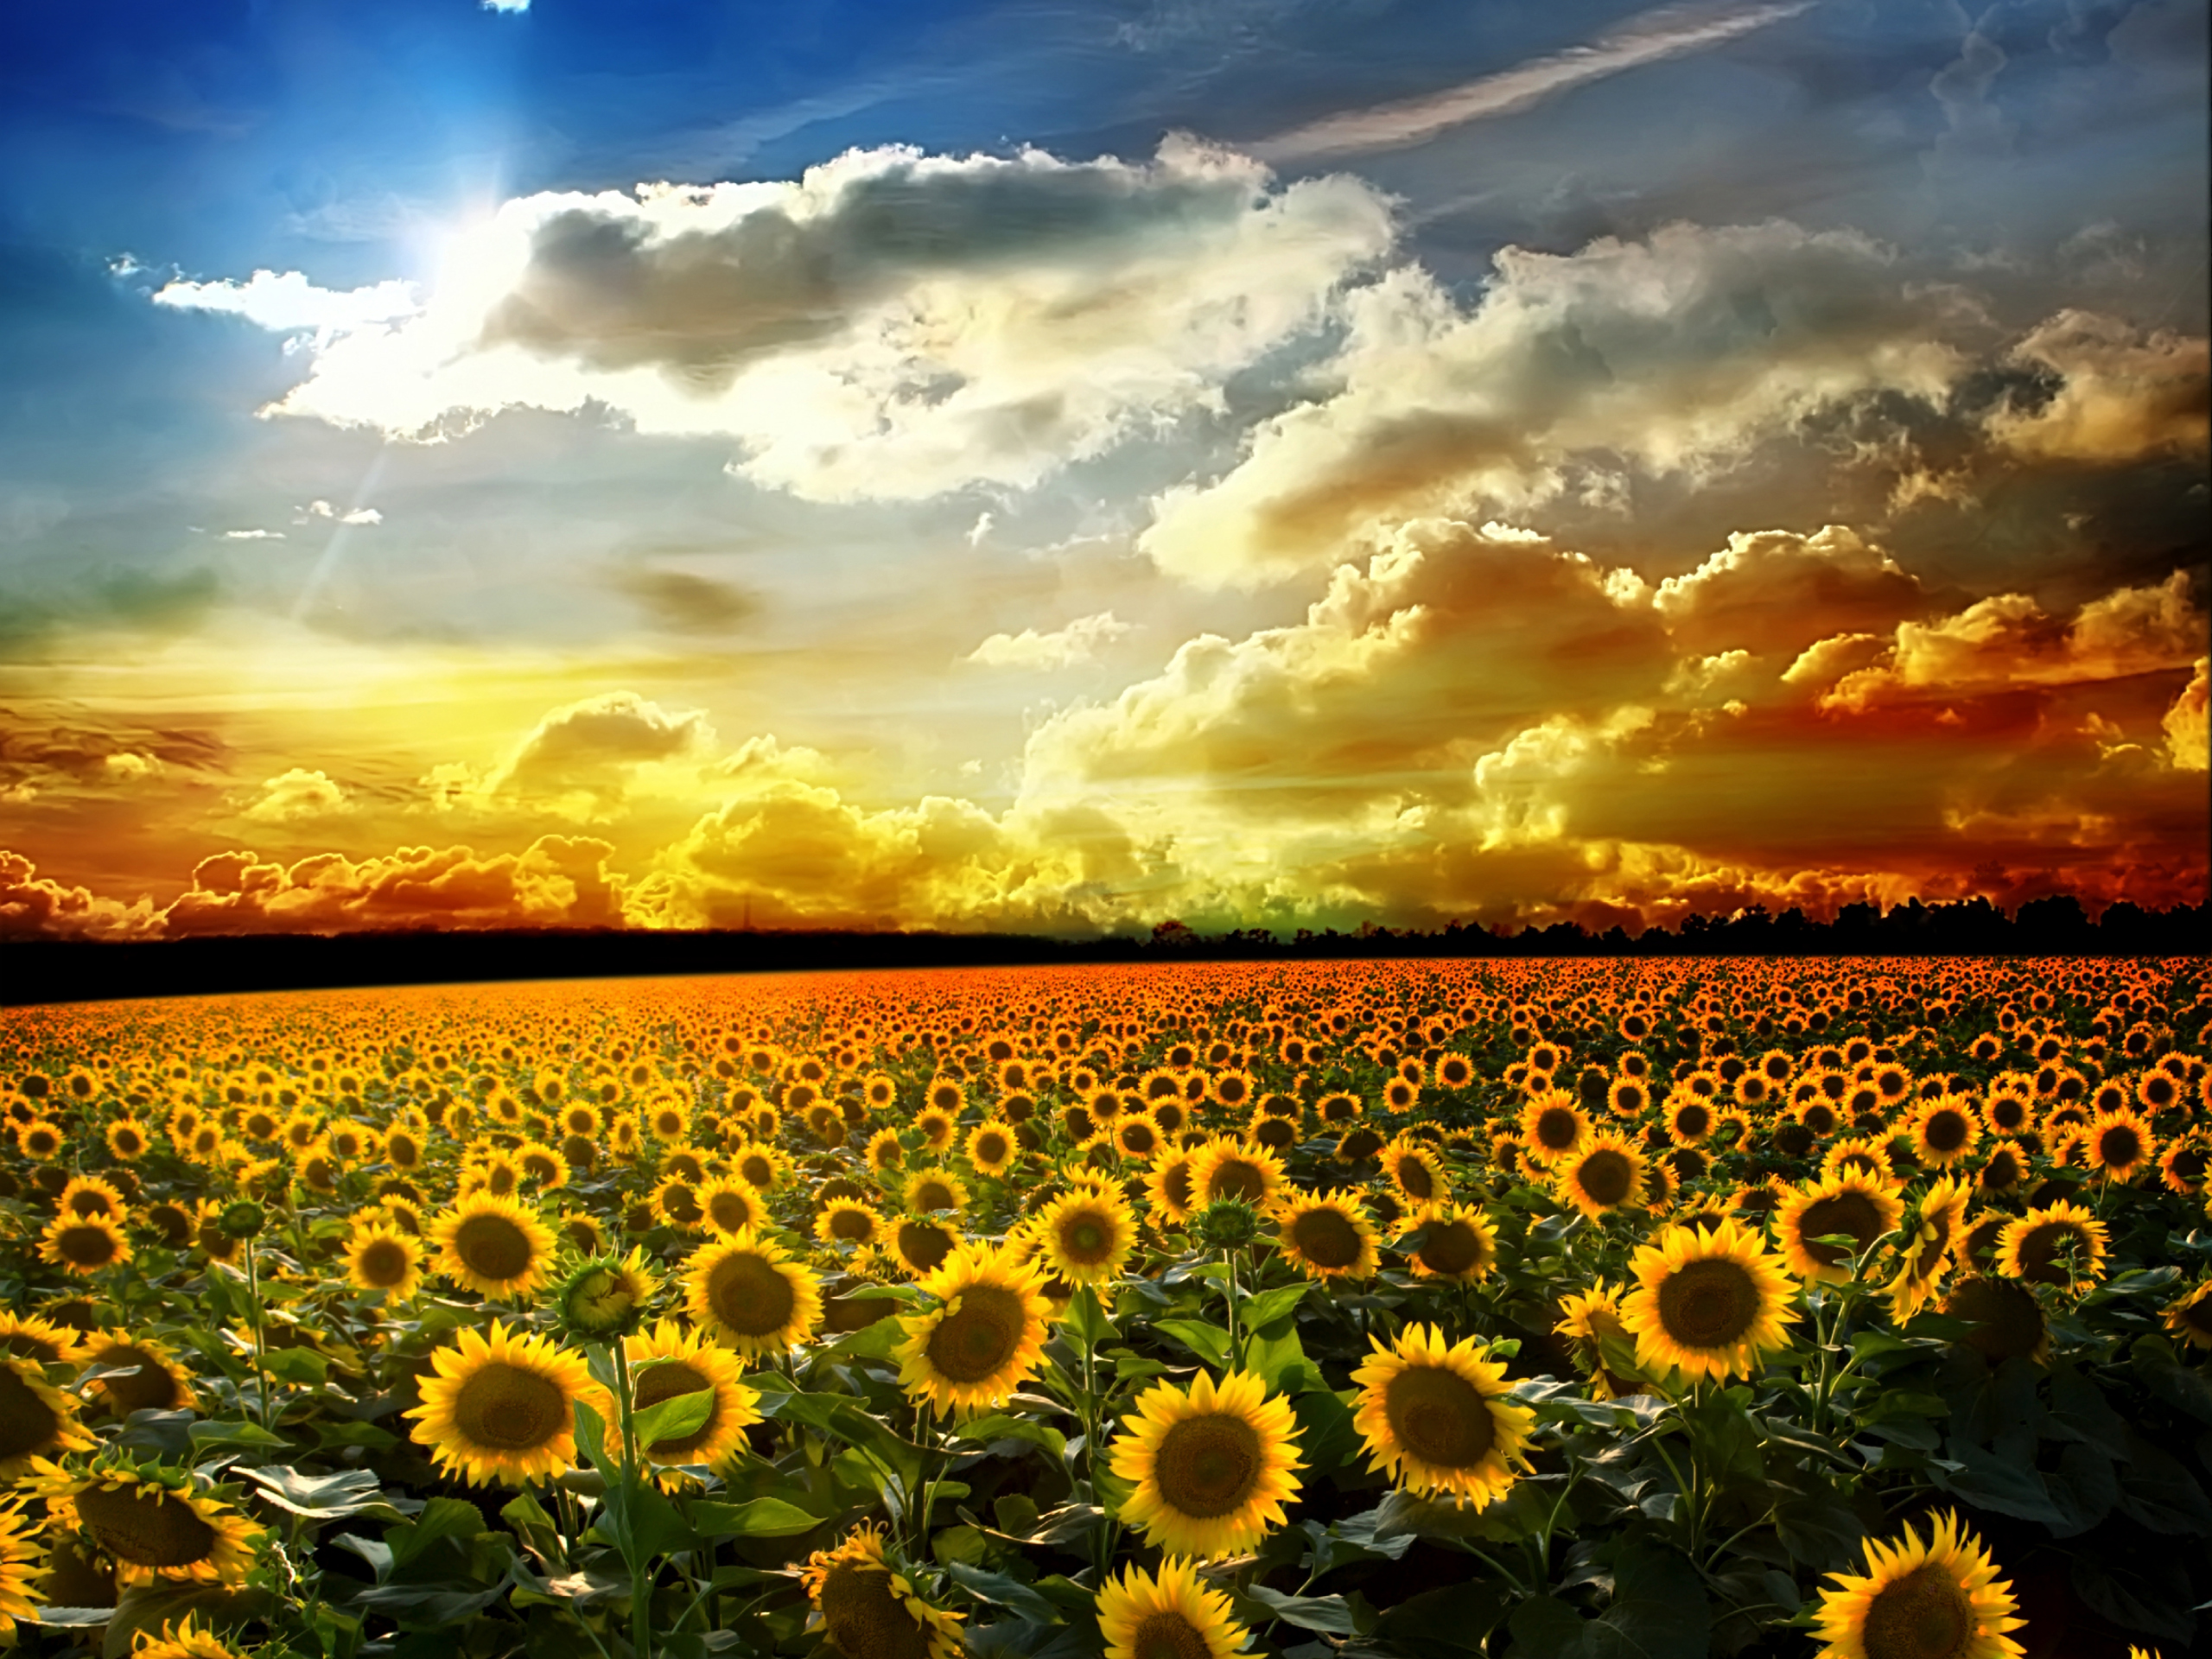 Sunflowers-73.jpg